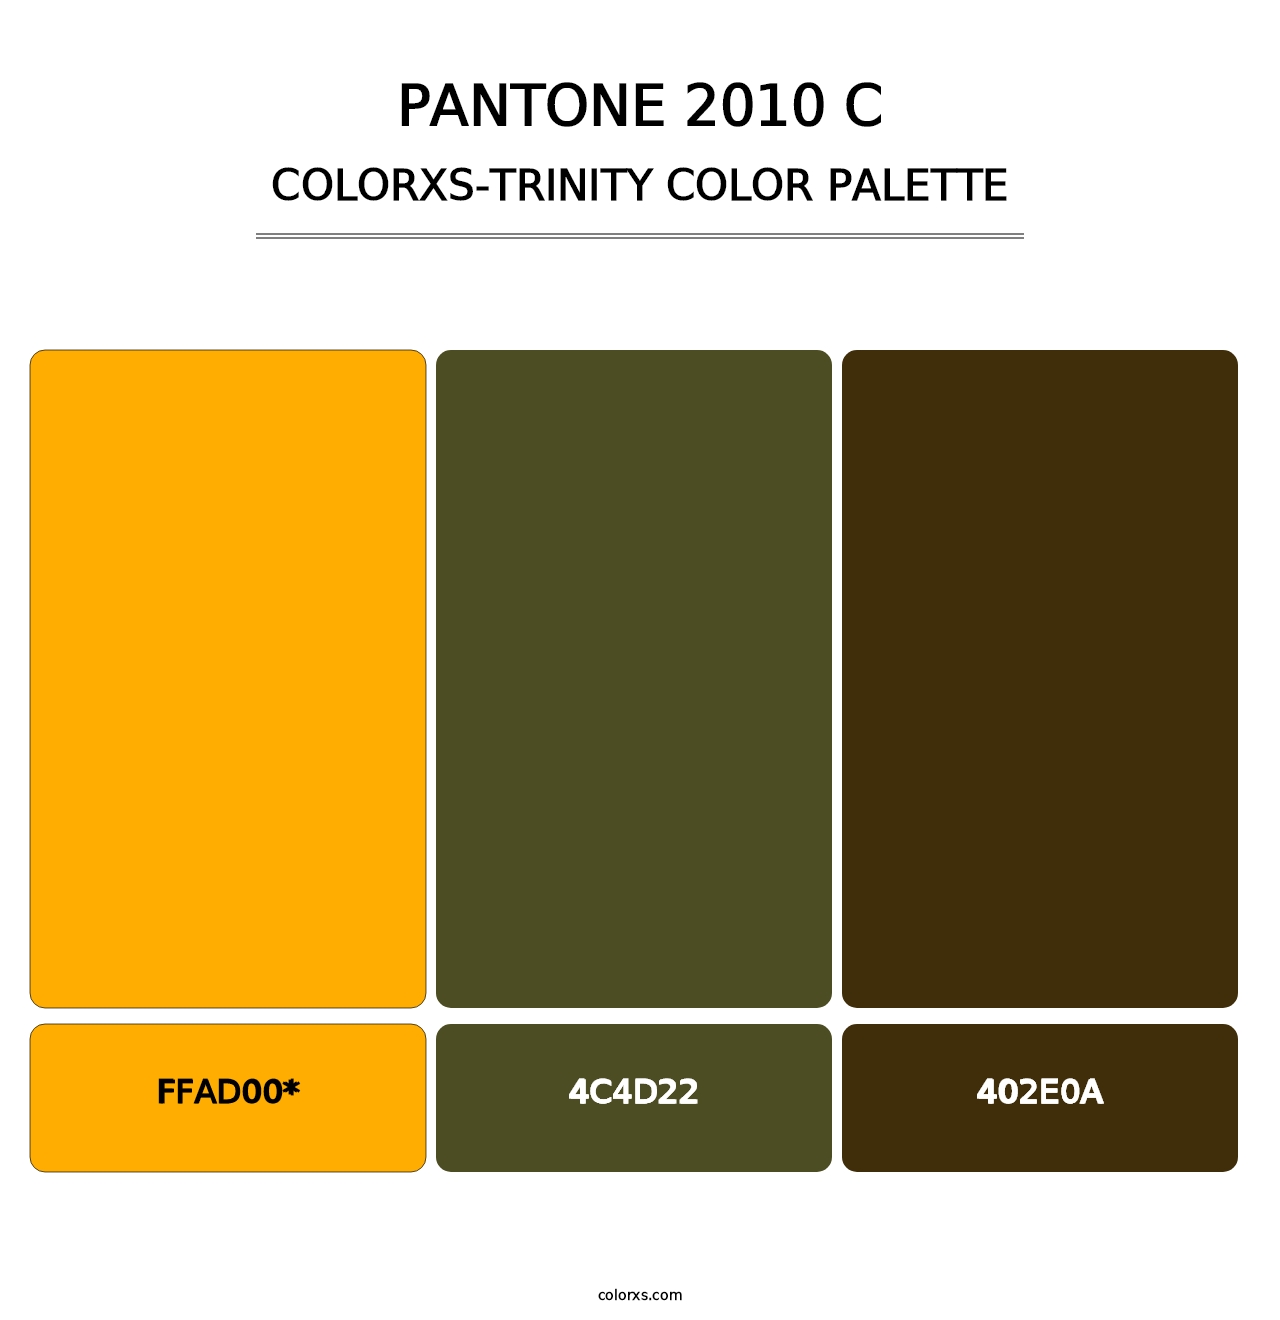 PANTONE 2010 C - Colorxs Trinity Palette